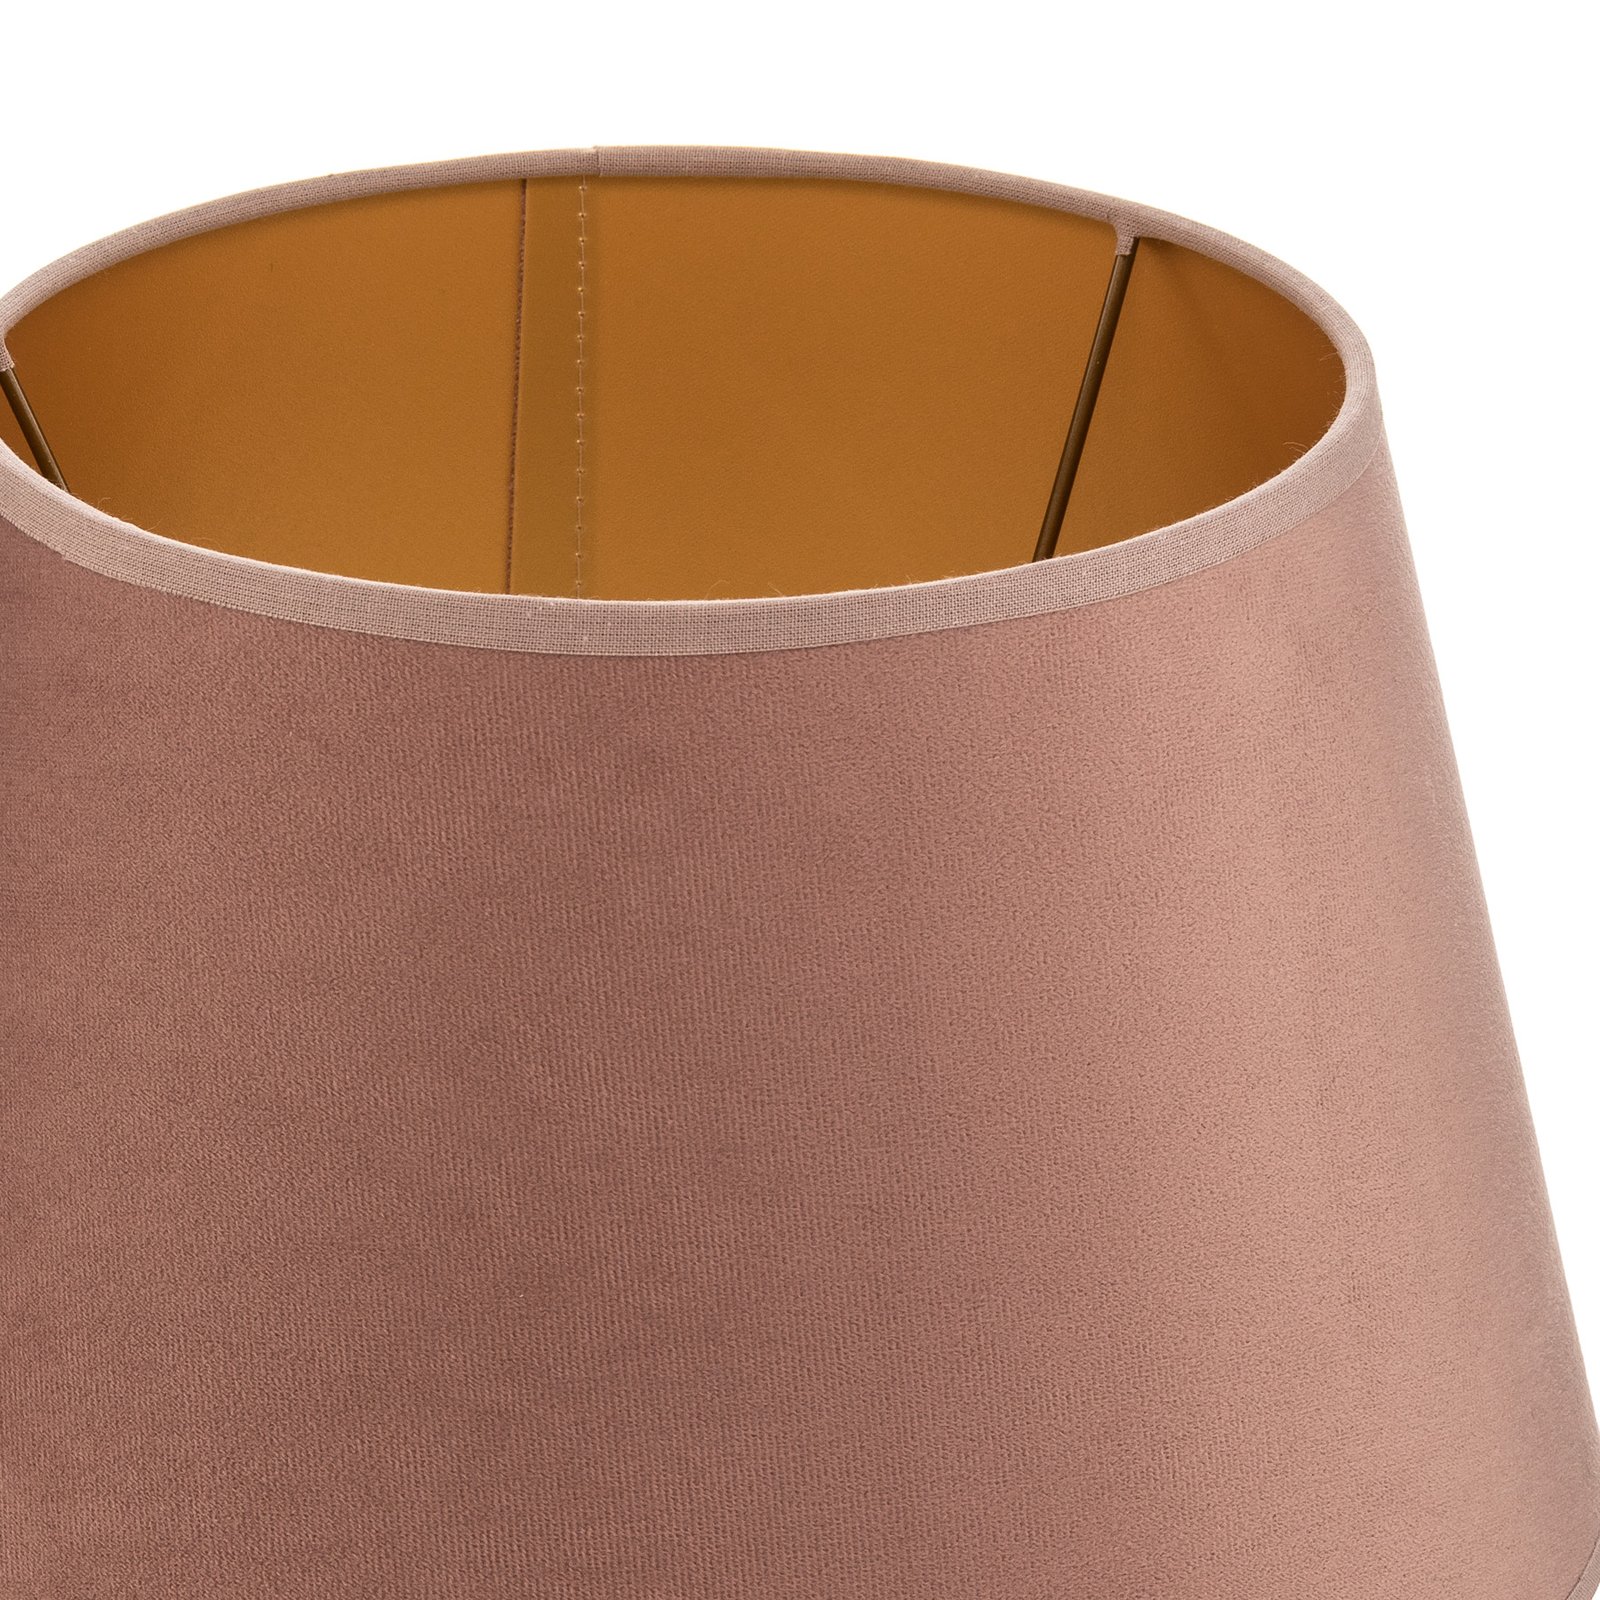 Lampenschirm Cone Höhe 18 cm, rosa/gold